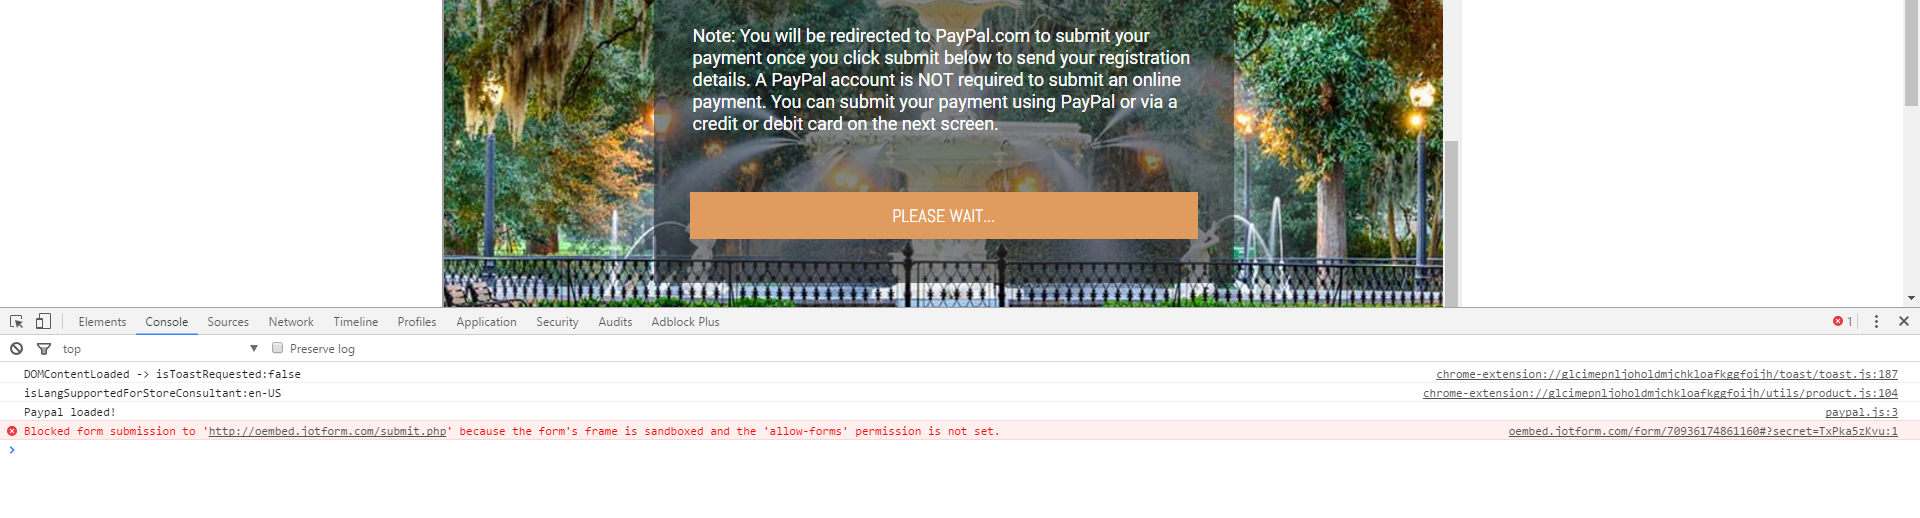 Paypal integration not working Image 1 Screenshot 20